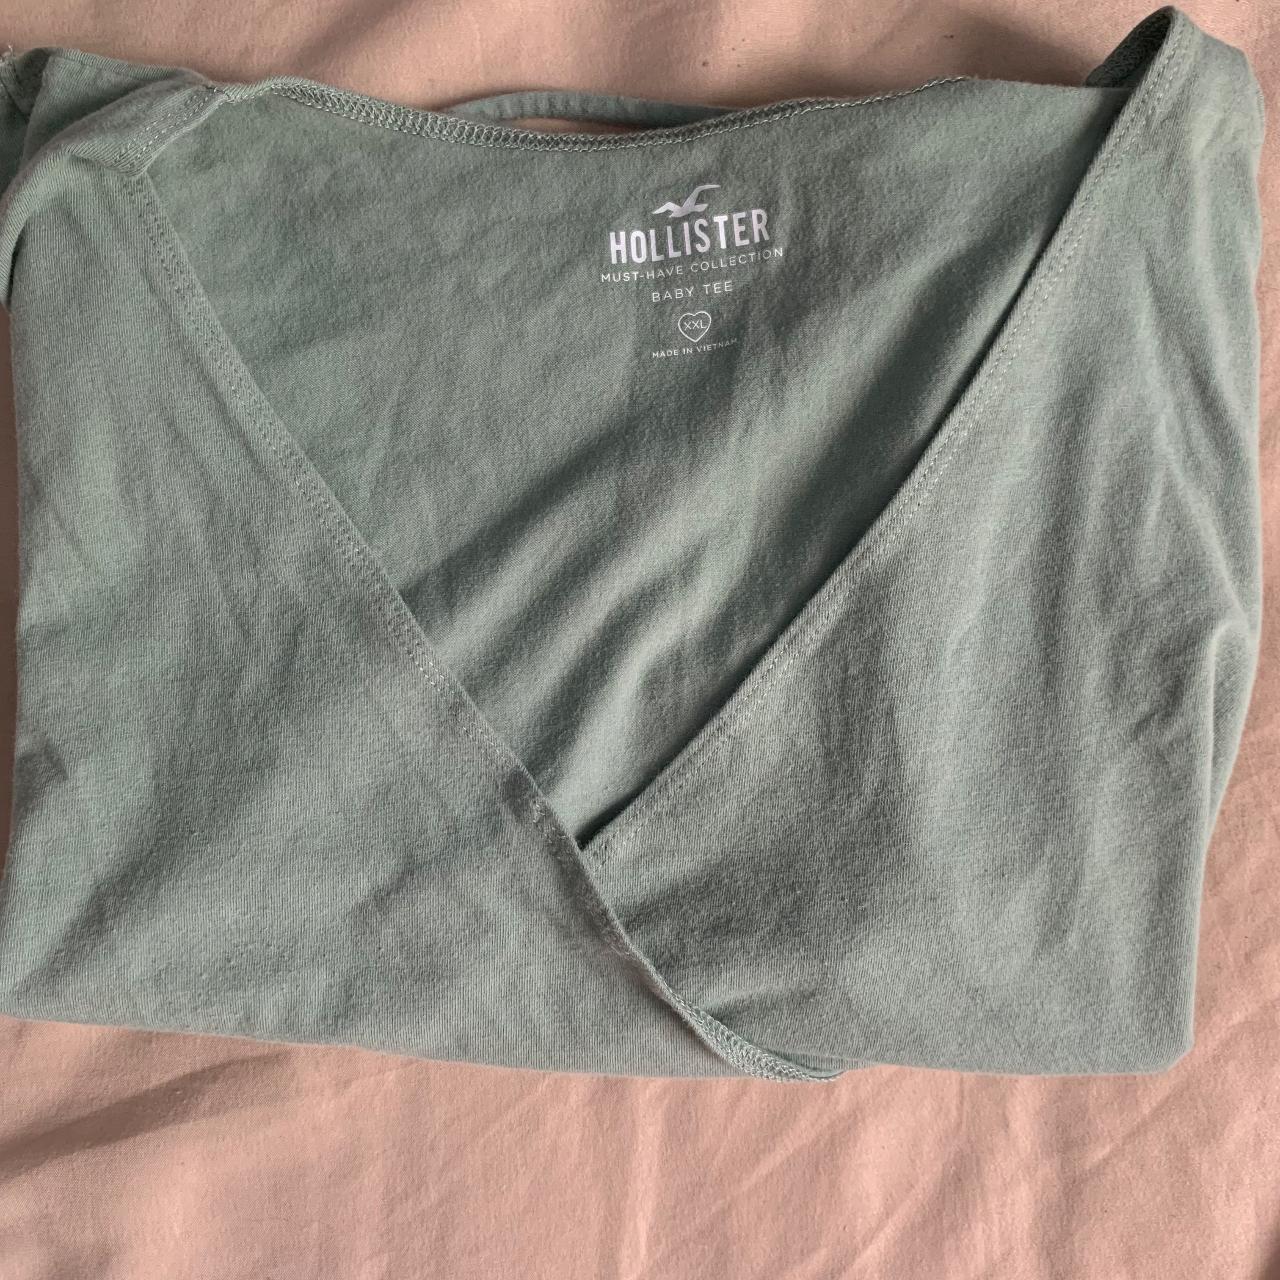 Green Hollister Shirt from must have... - Depop